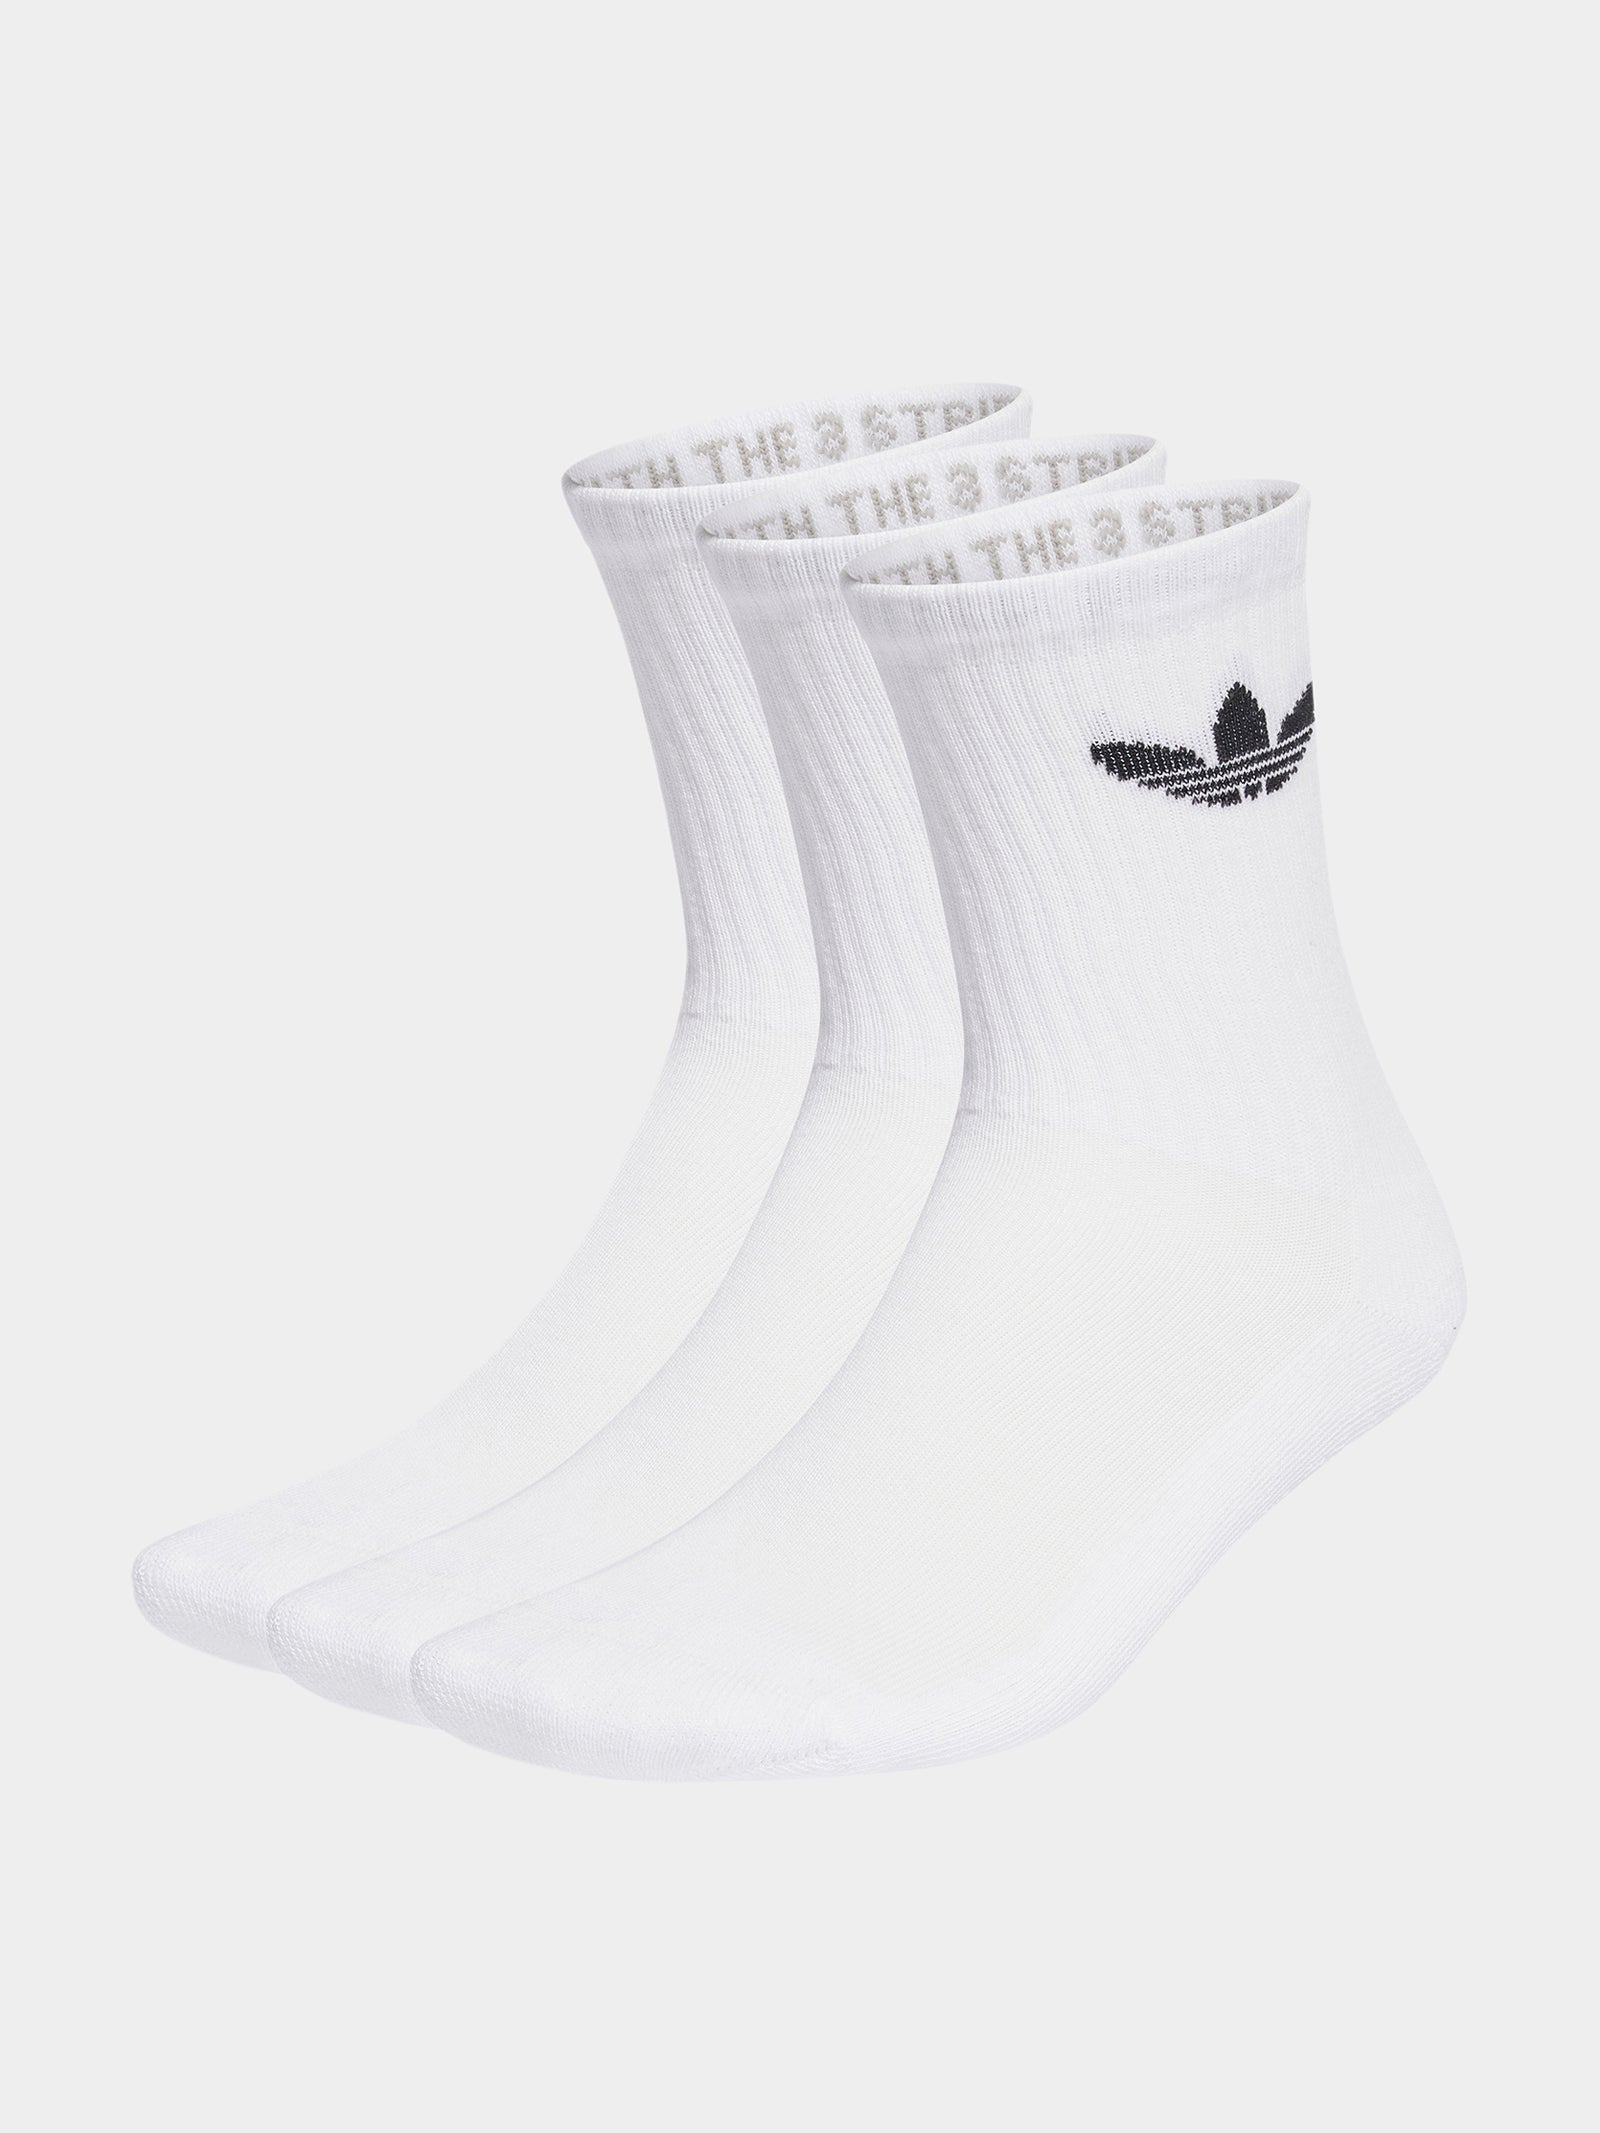 3 Pairs of Trefoil Cushion Crew Socks in White & Black - Glue Store